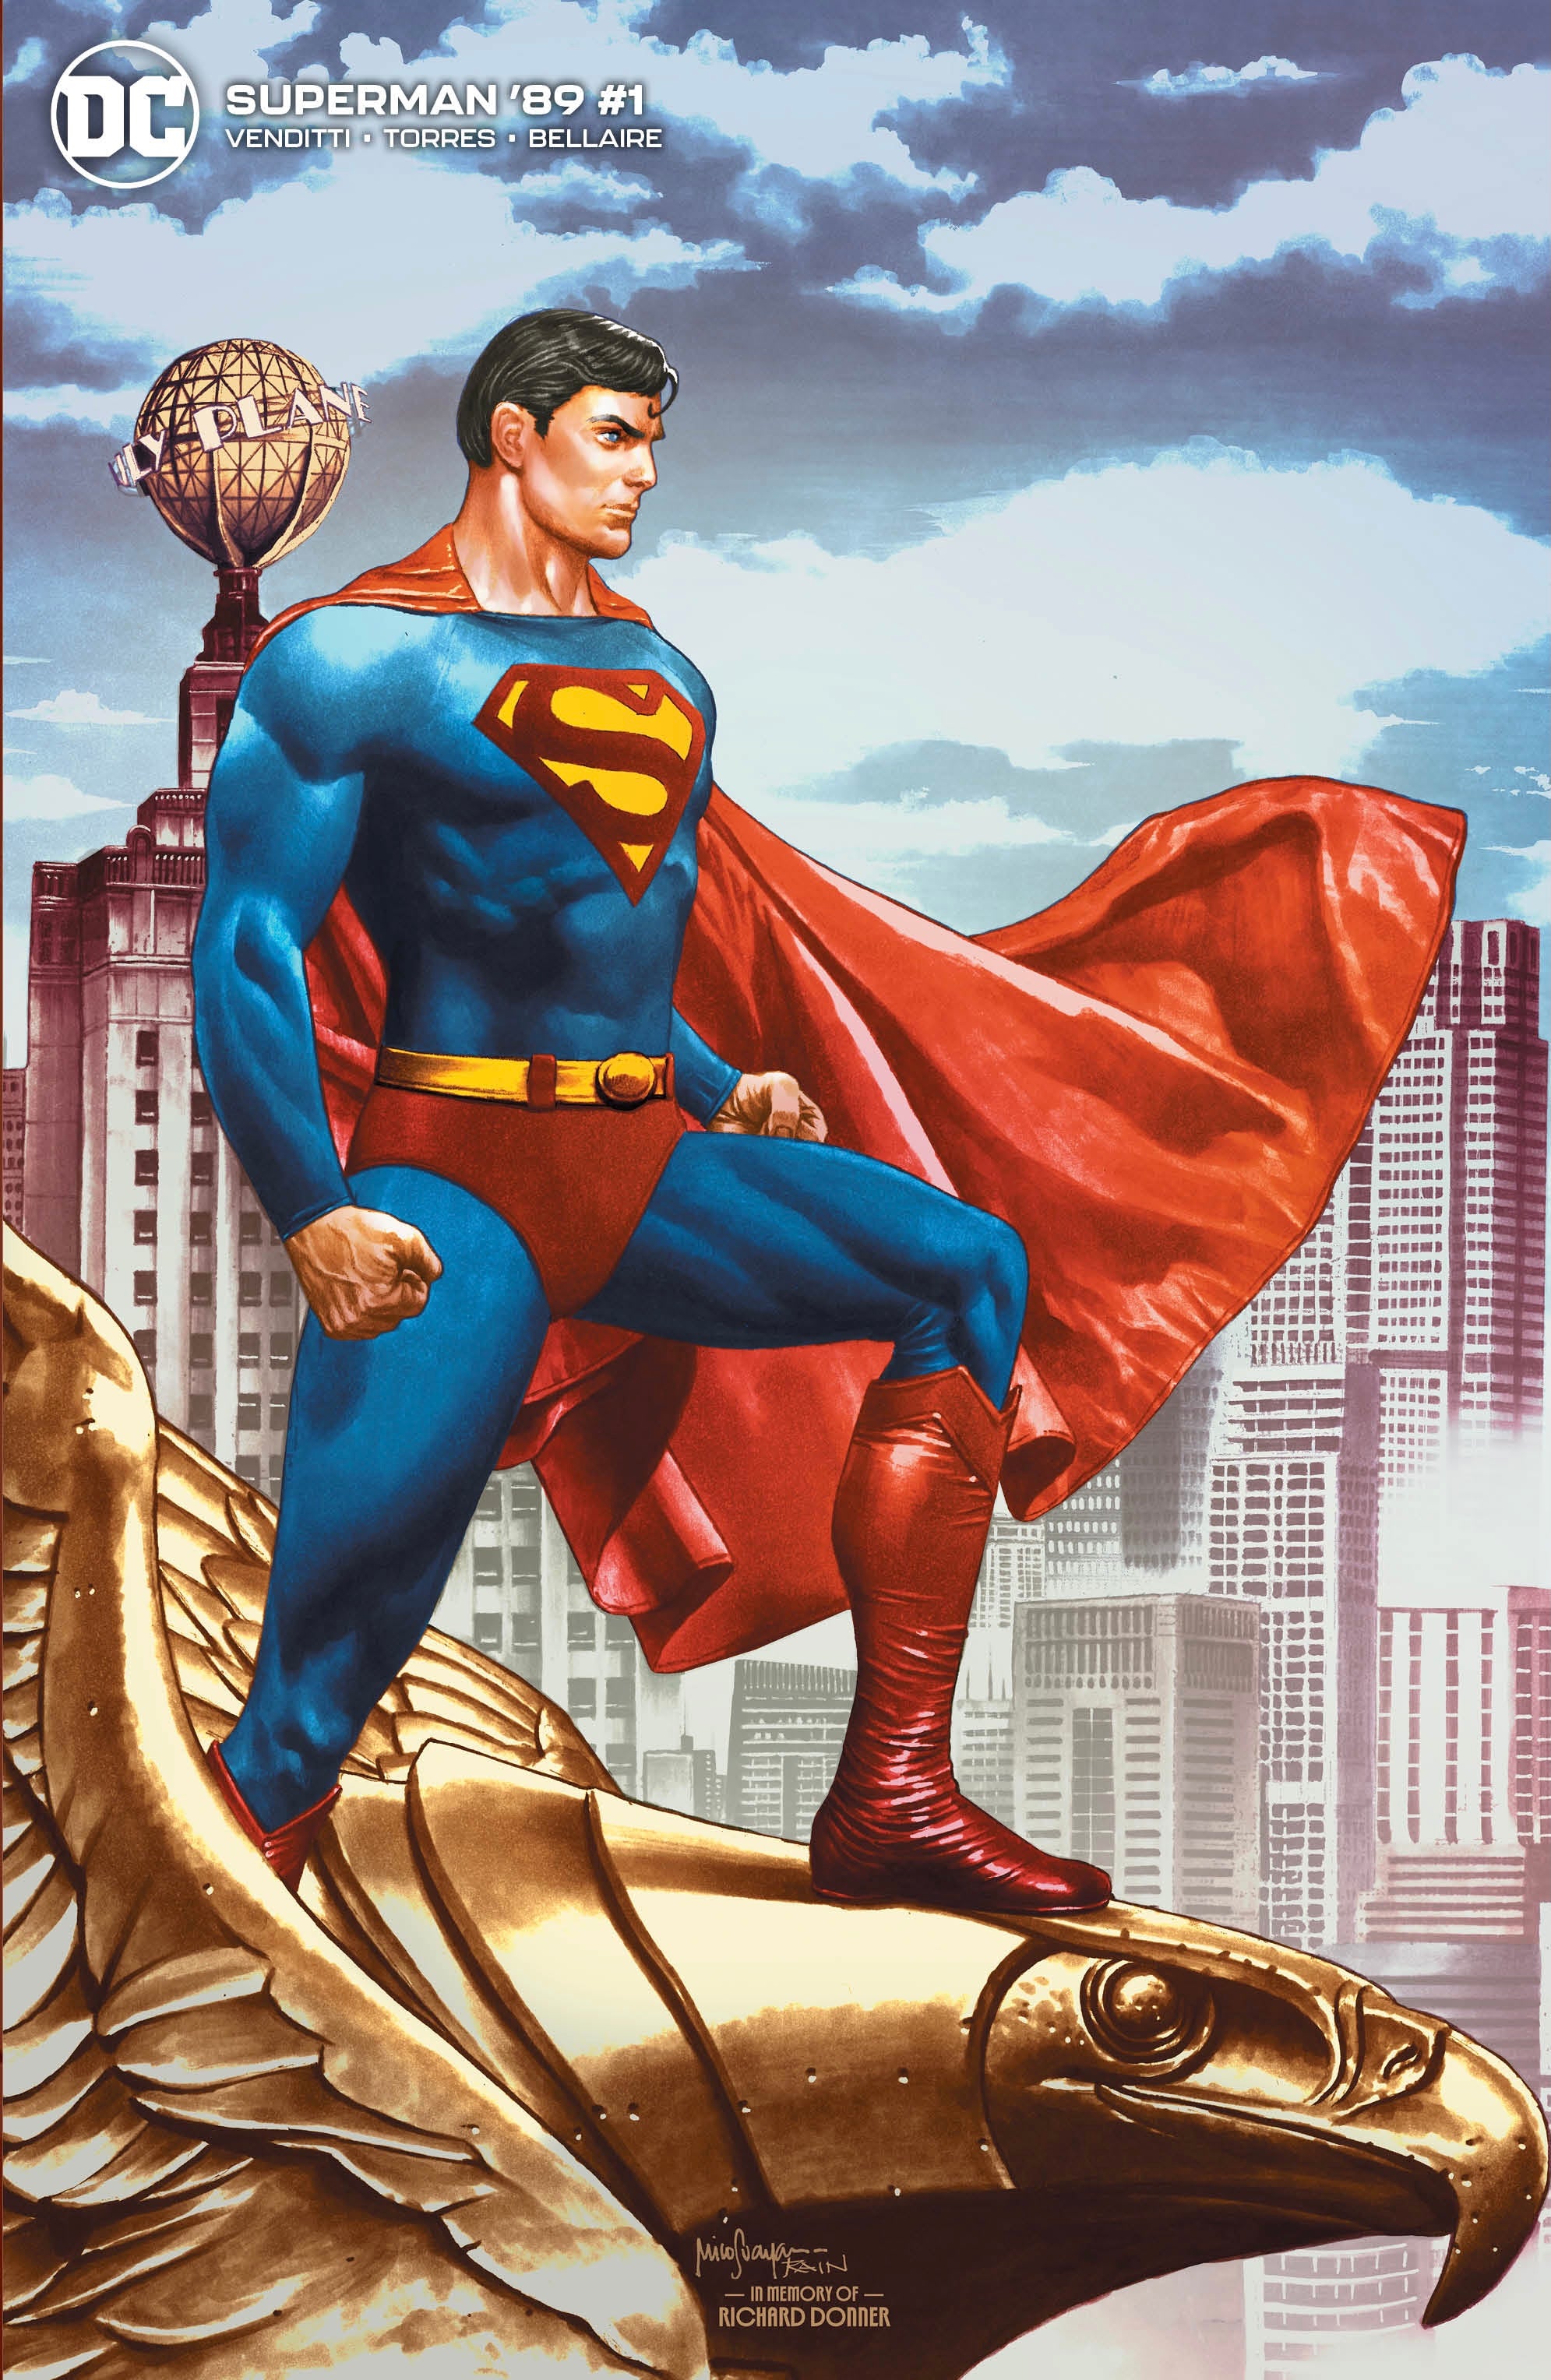 08/24/2021 SUPERMAN 78 #1 & BATMAN 89 #1 MICO SUAYAN EXCLUSIVE "WORLDS FINEST" COMBO